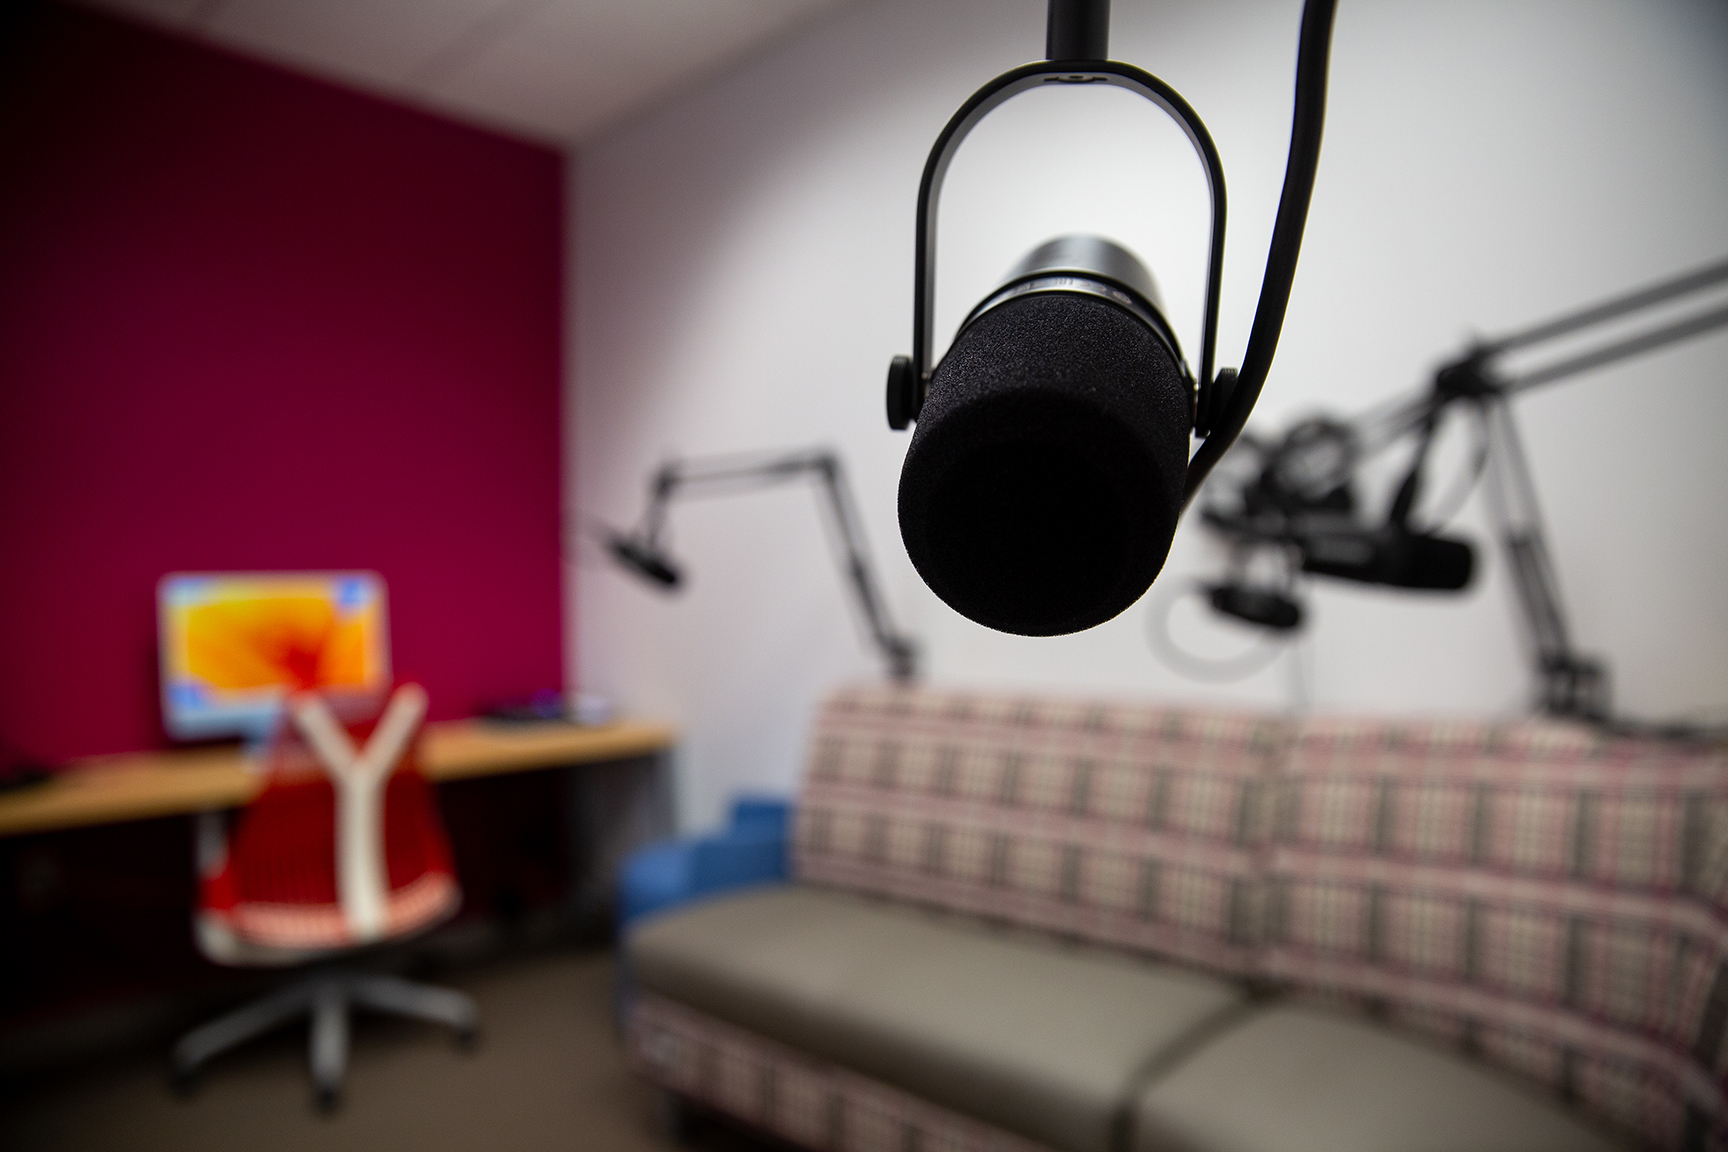 Podcast studio microphones and imac